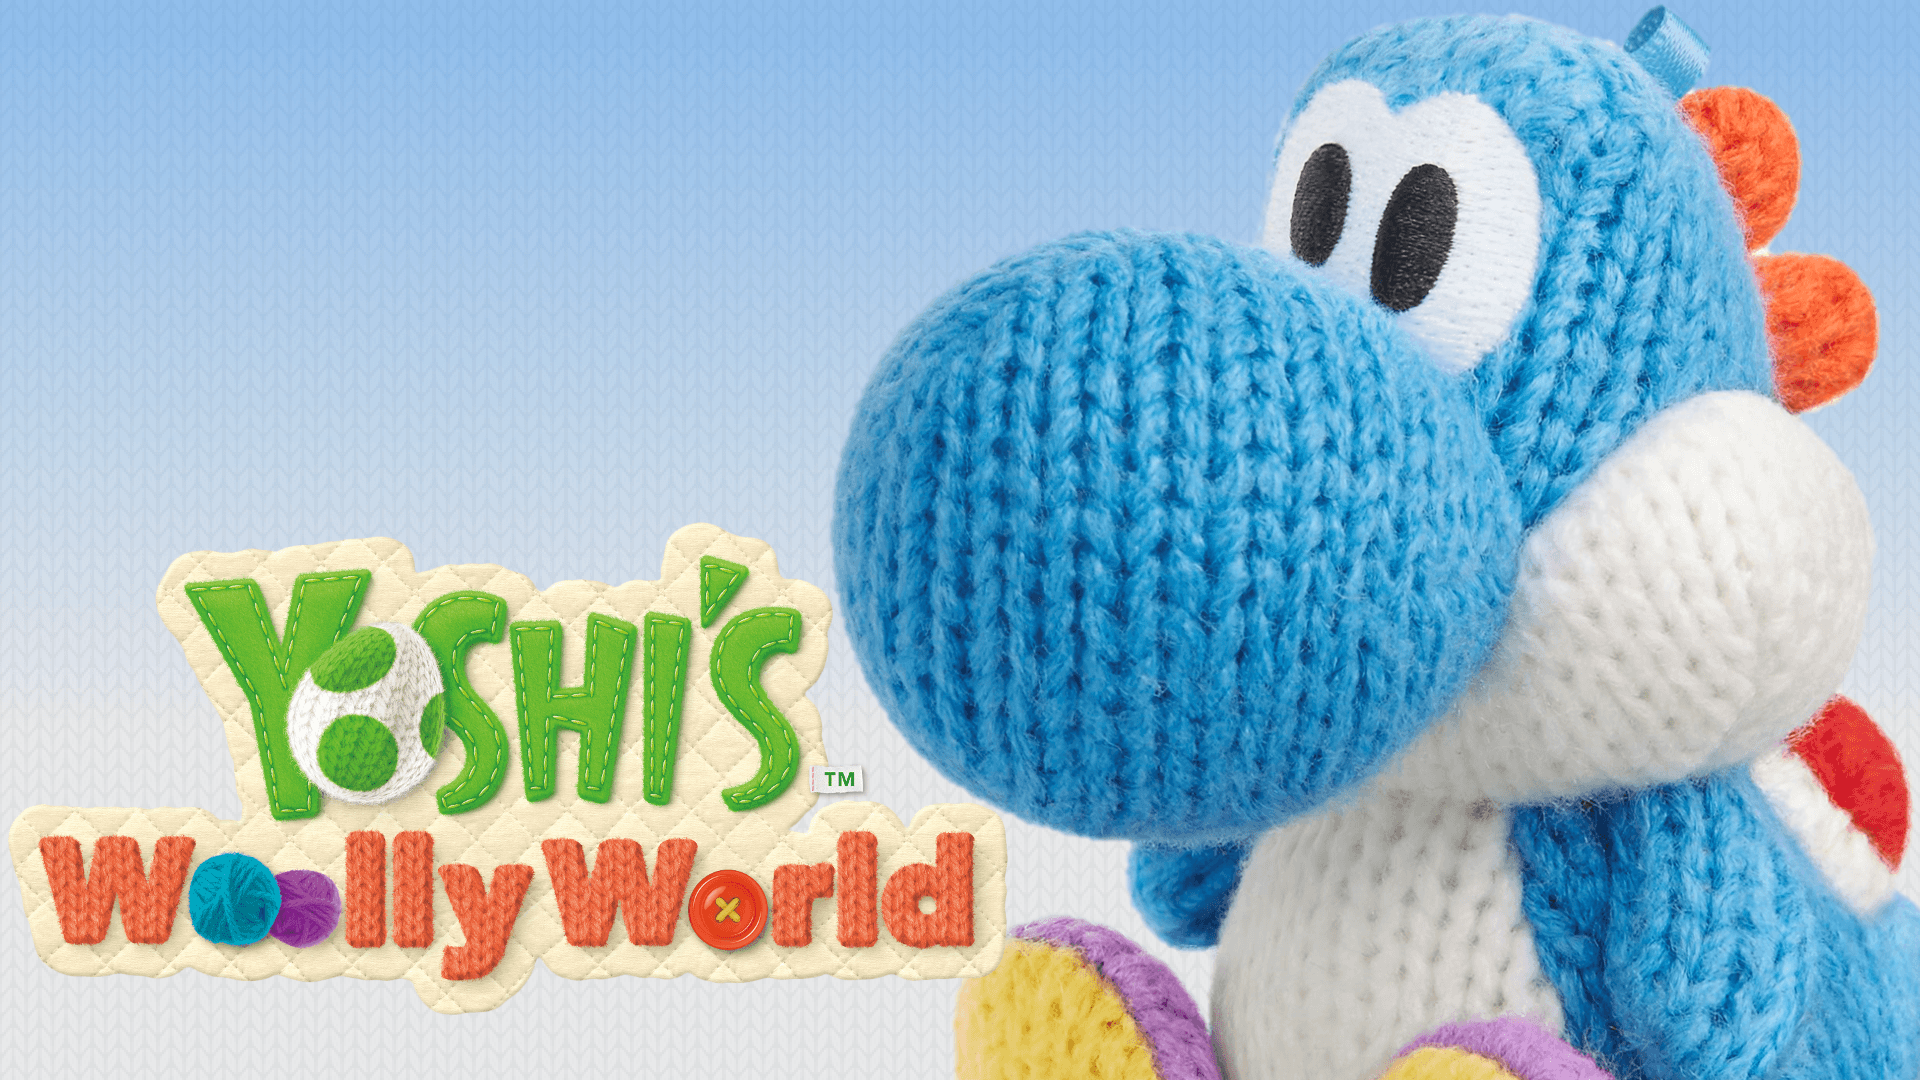 Yoshi's Woolly World Details Games Database